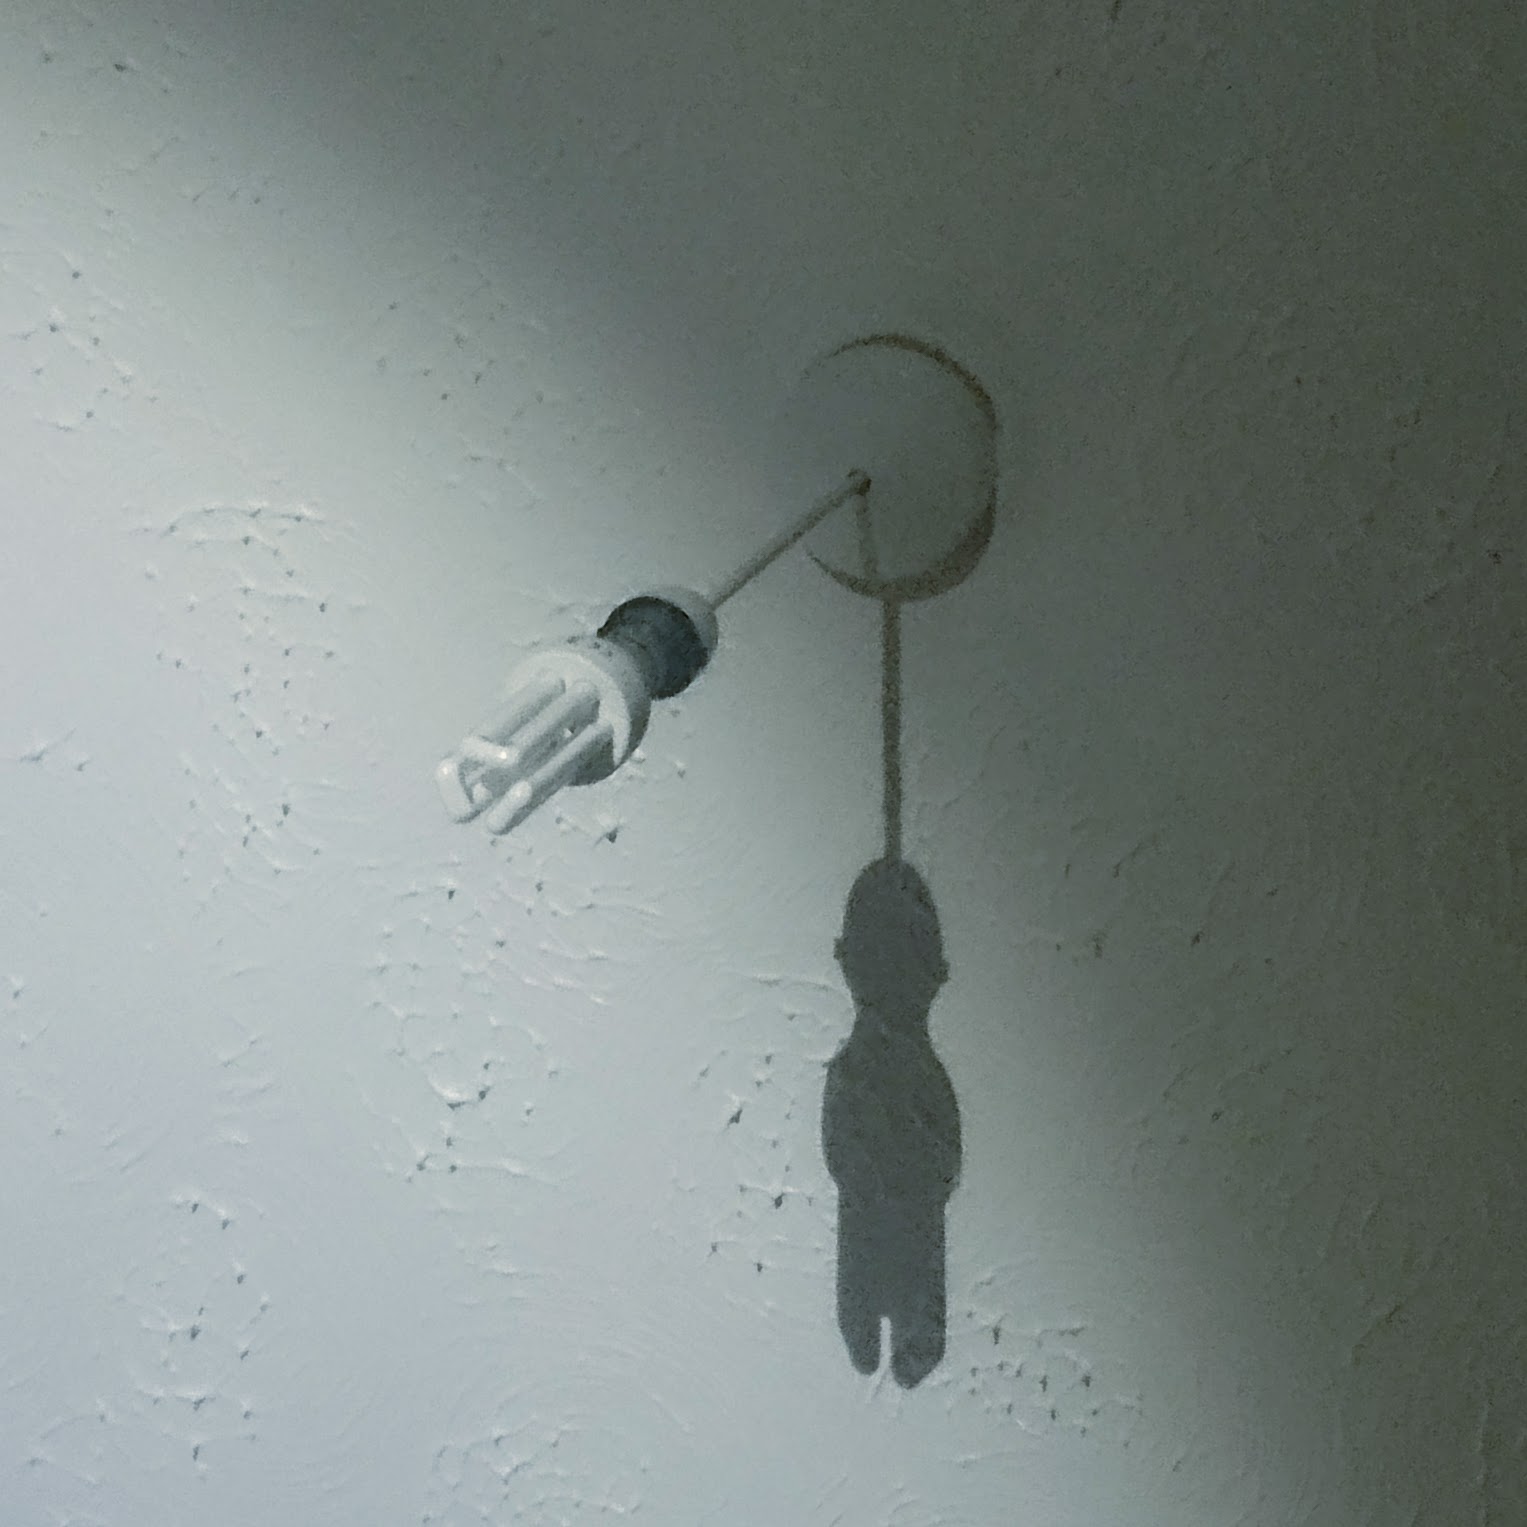 Energy saving lightbulb casts a tragic shadow The Poke